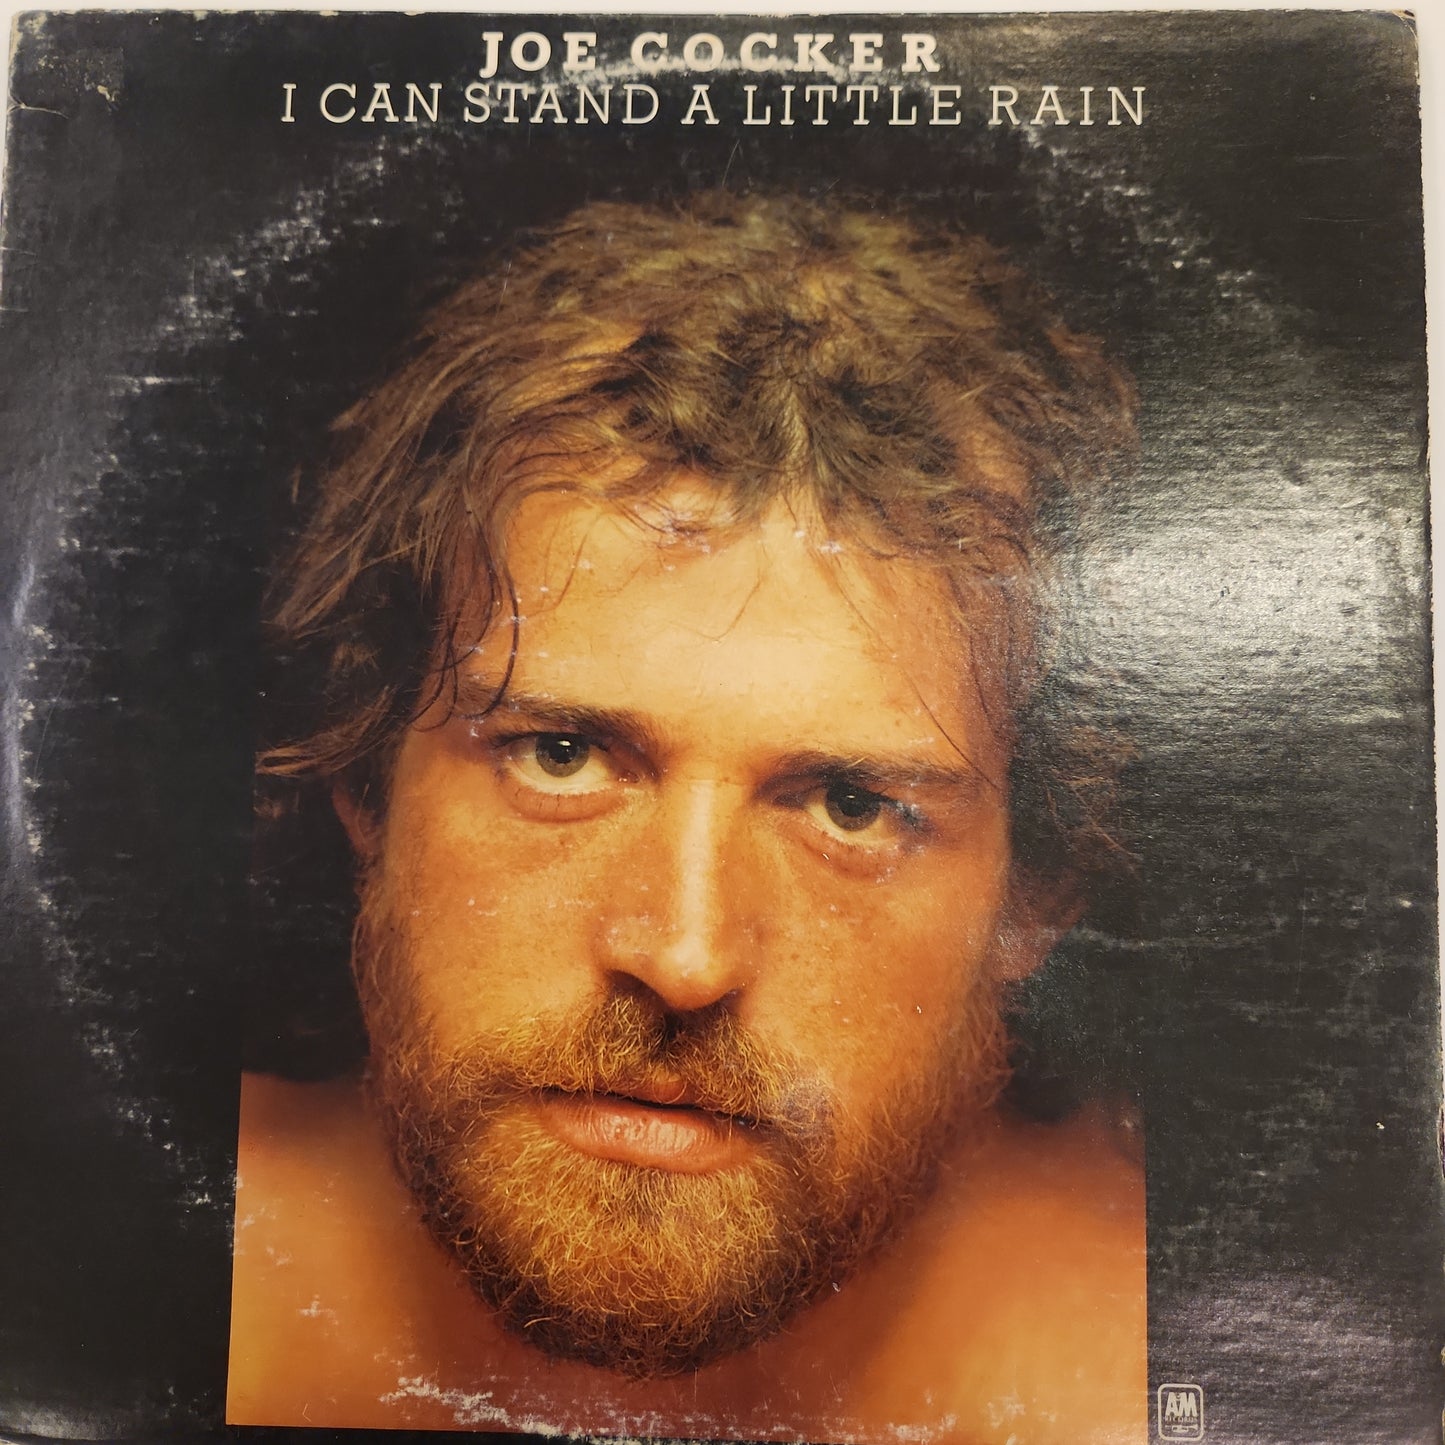 Joe Cocker - I Can Stand a Little Rain 1